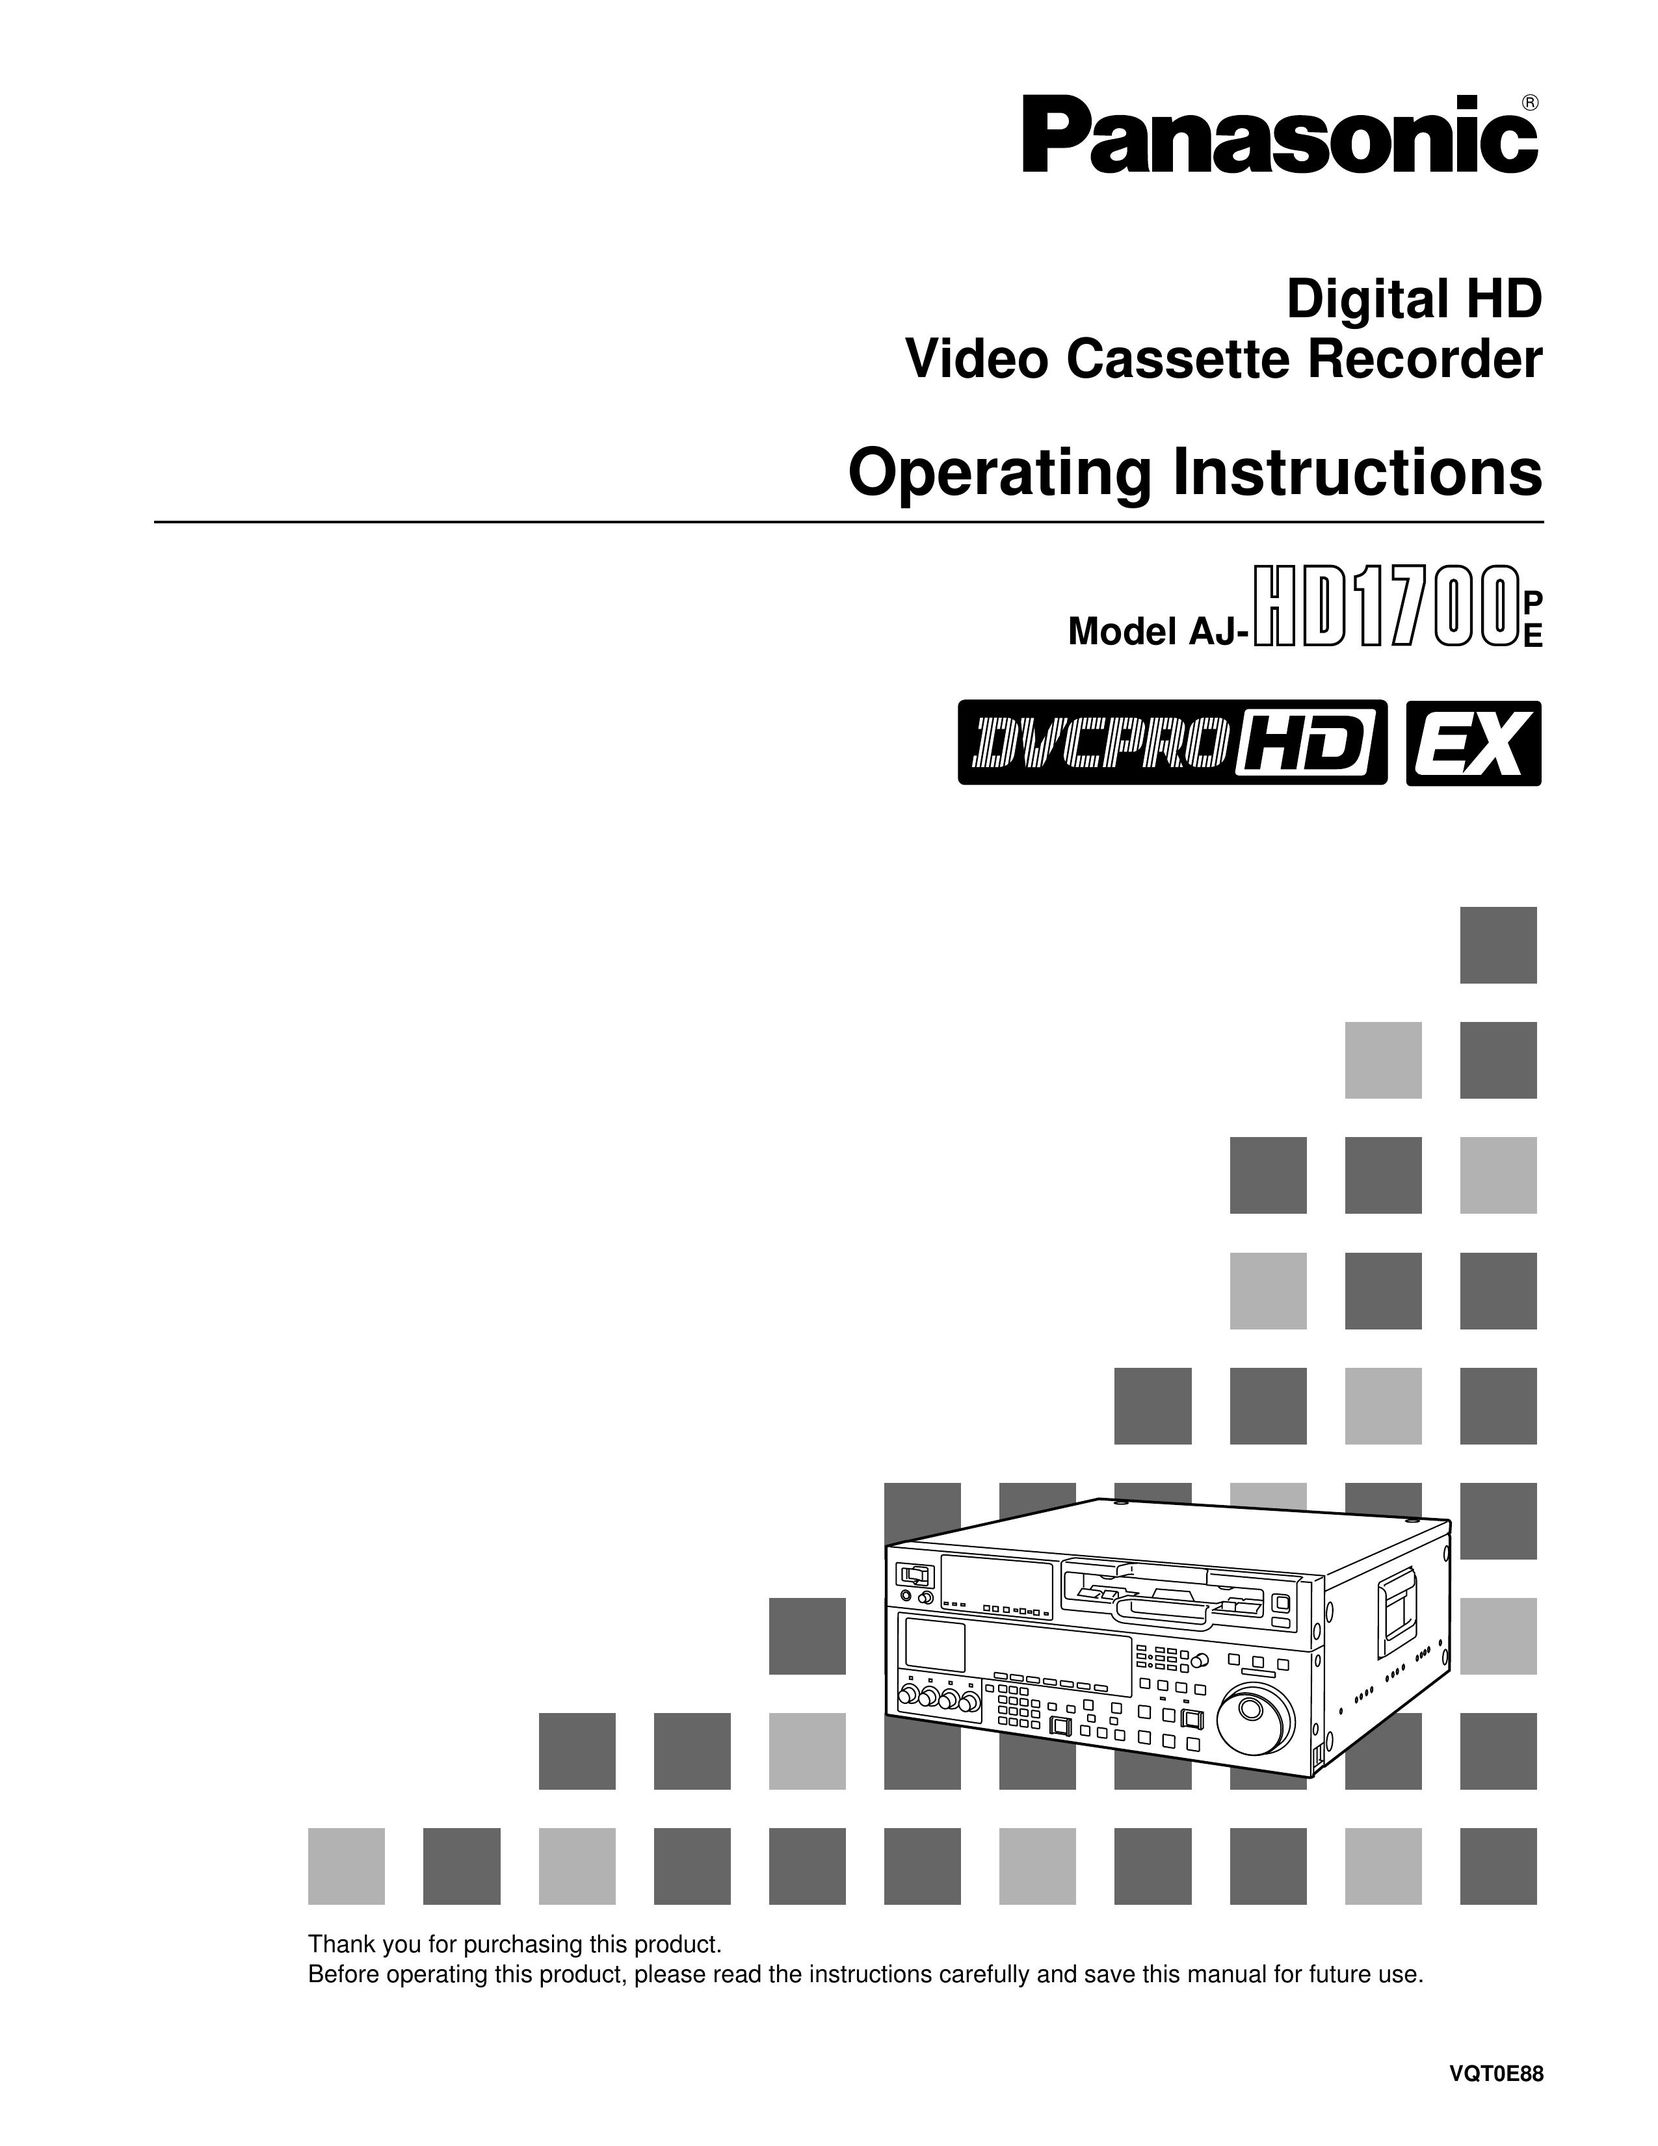 Panasonic AJ-HD1700 VCR User Manual